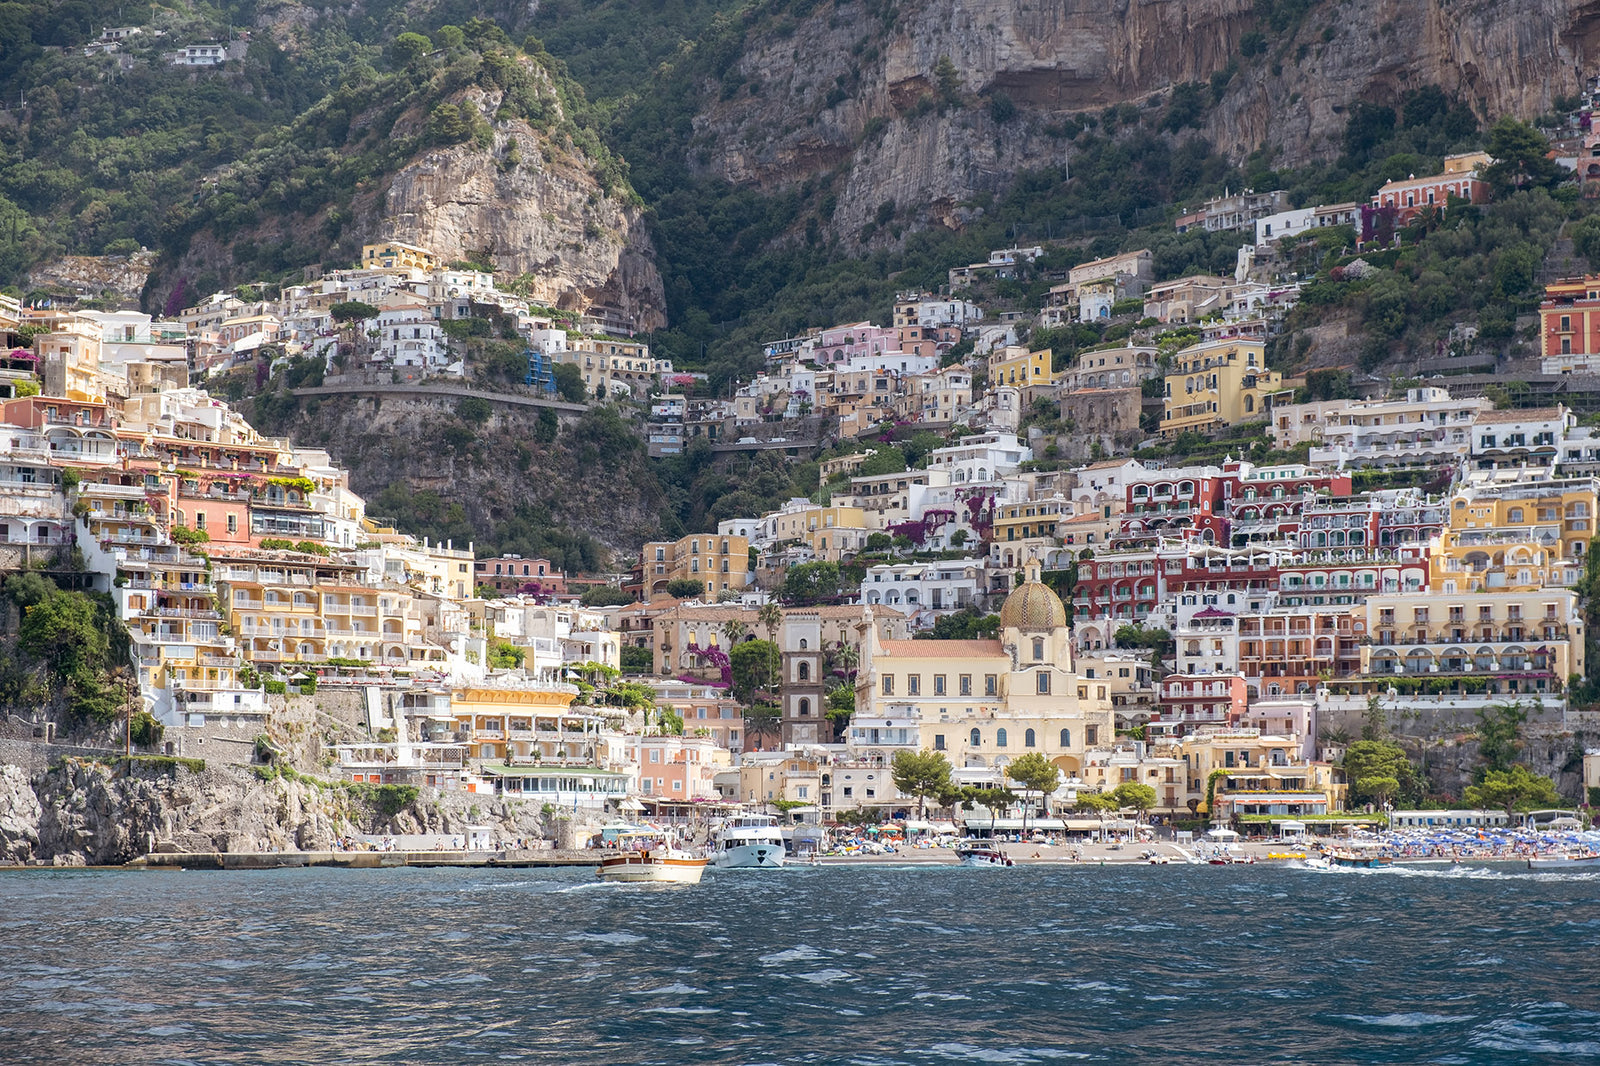 Lámina Espresso Break at the Amalfi Coast, Positano, Italy